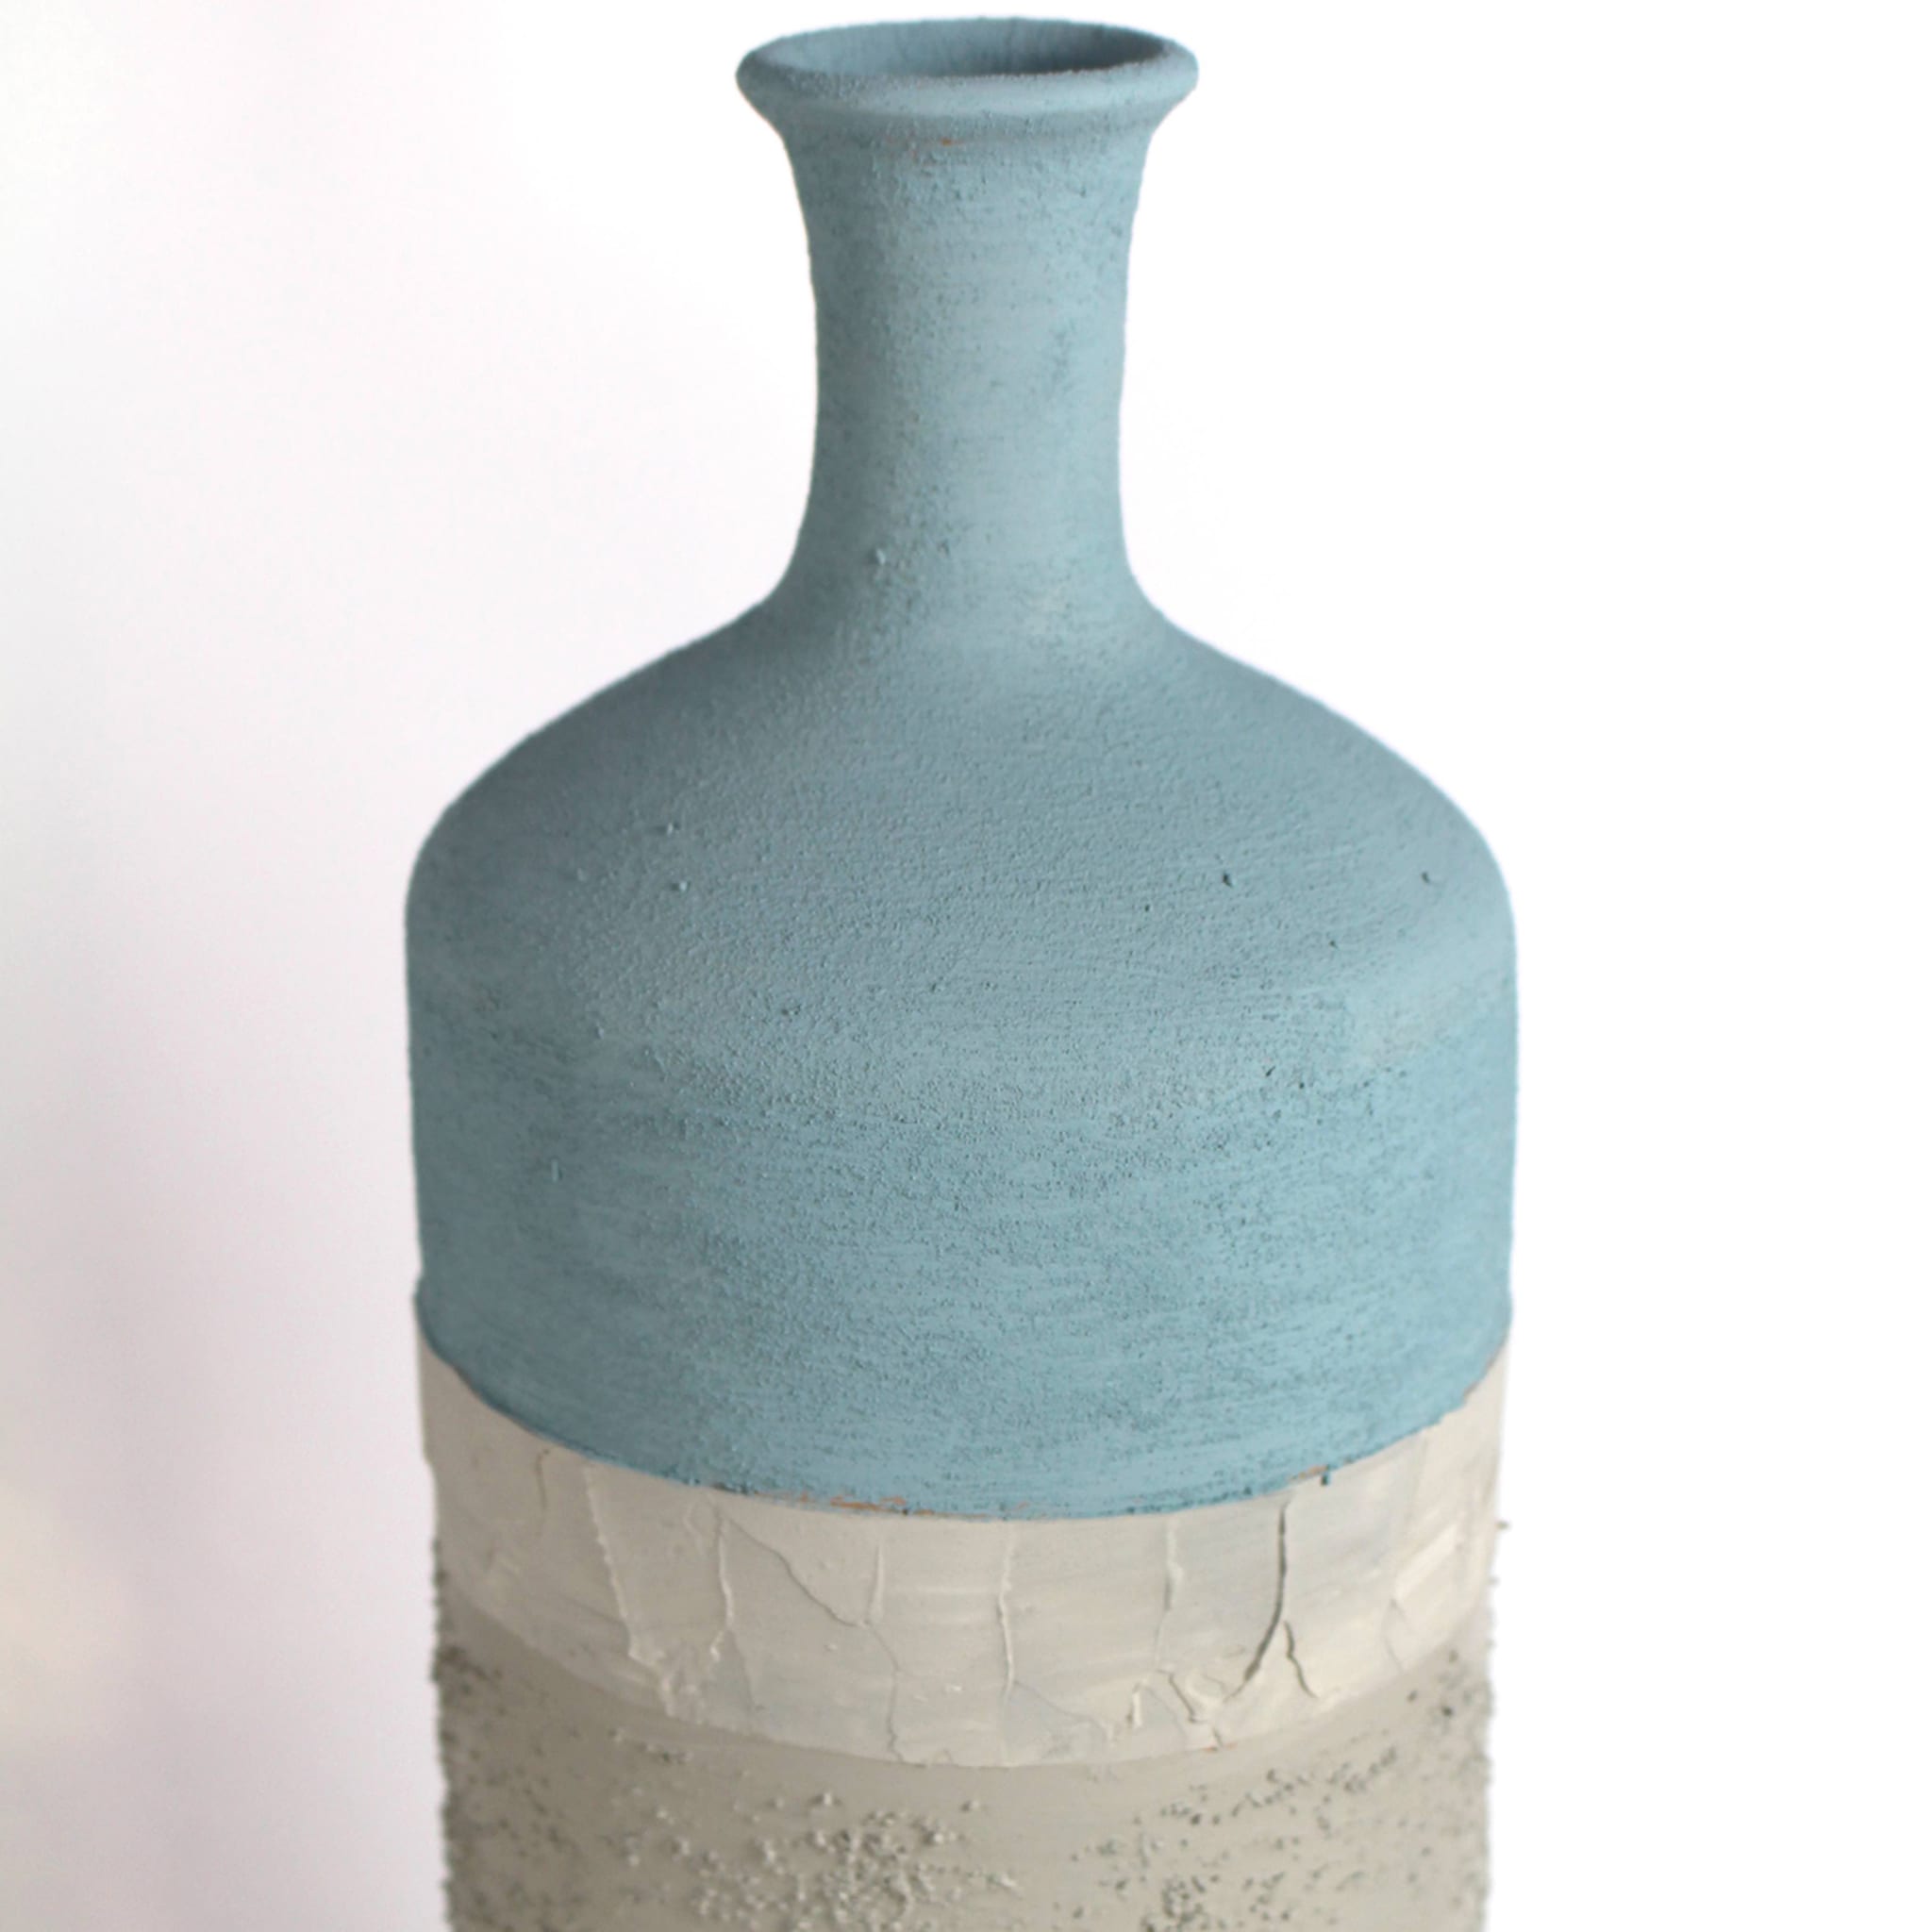 Azure, Gray, Yellow Vase 25 by Mascia Meccani - Alternative view 1